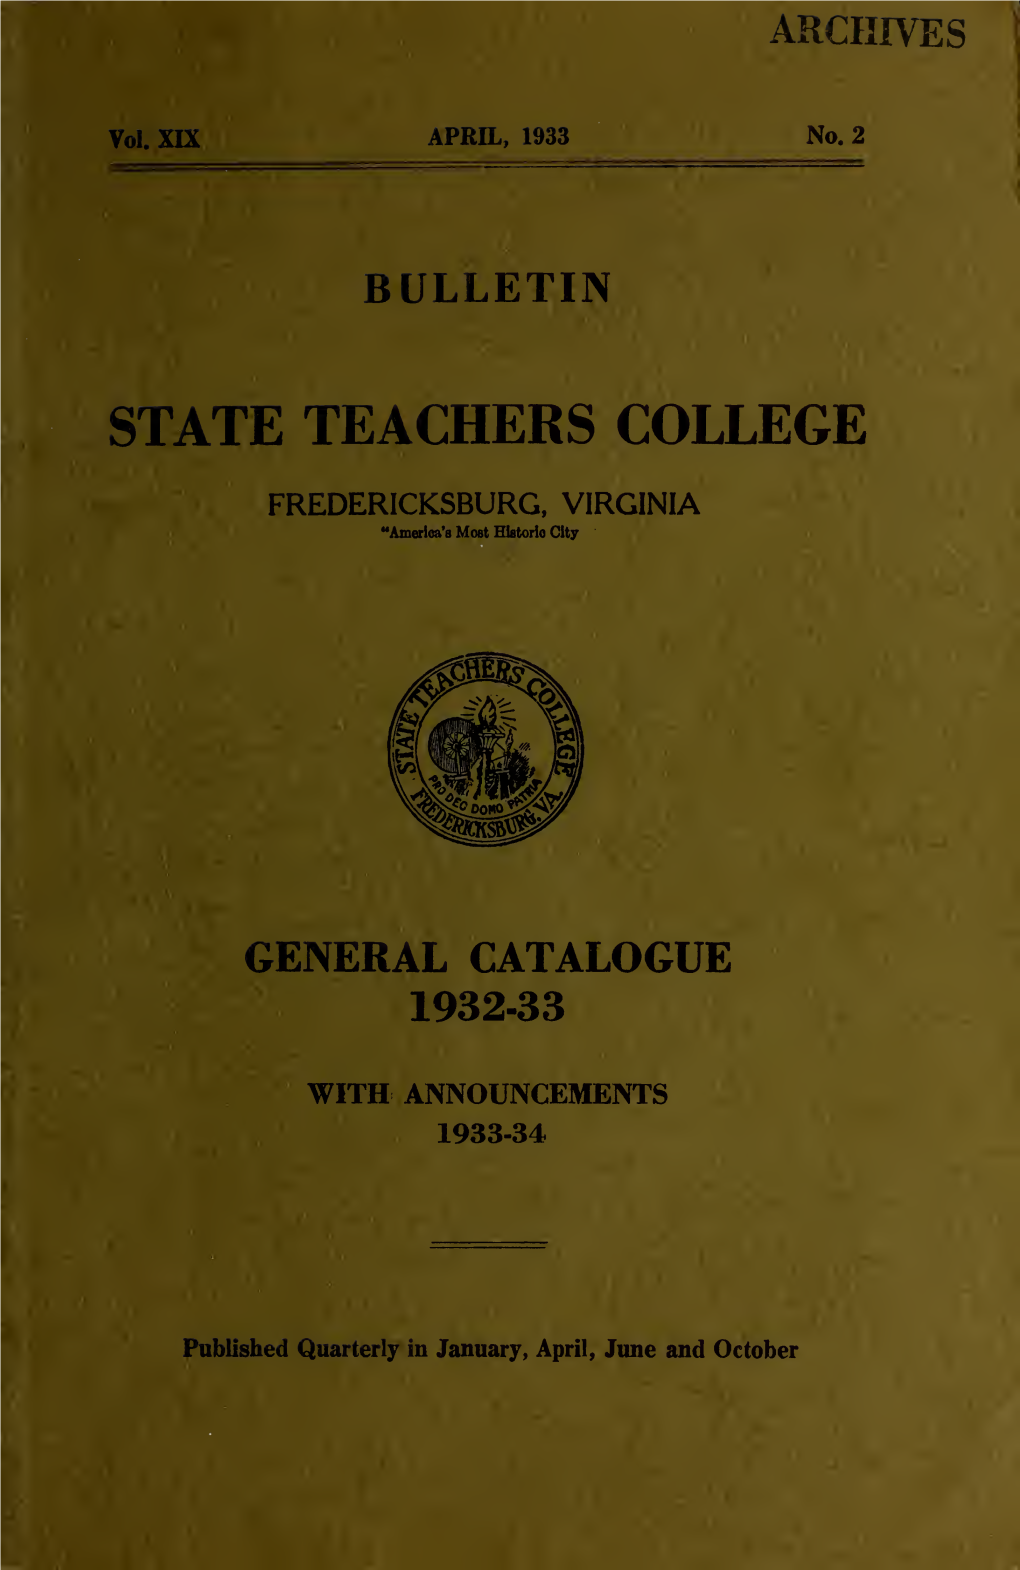 Bulletin: State Teachers College, Fredericksburg, Virginia, April, 1933